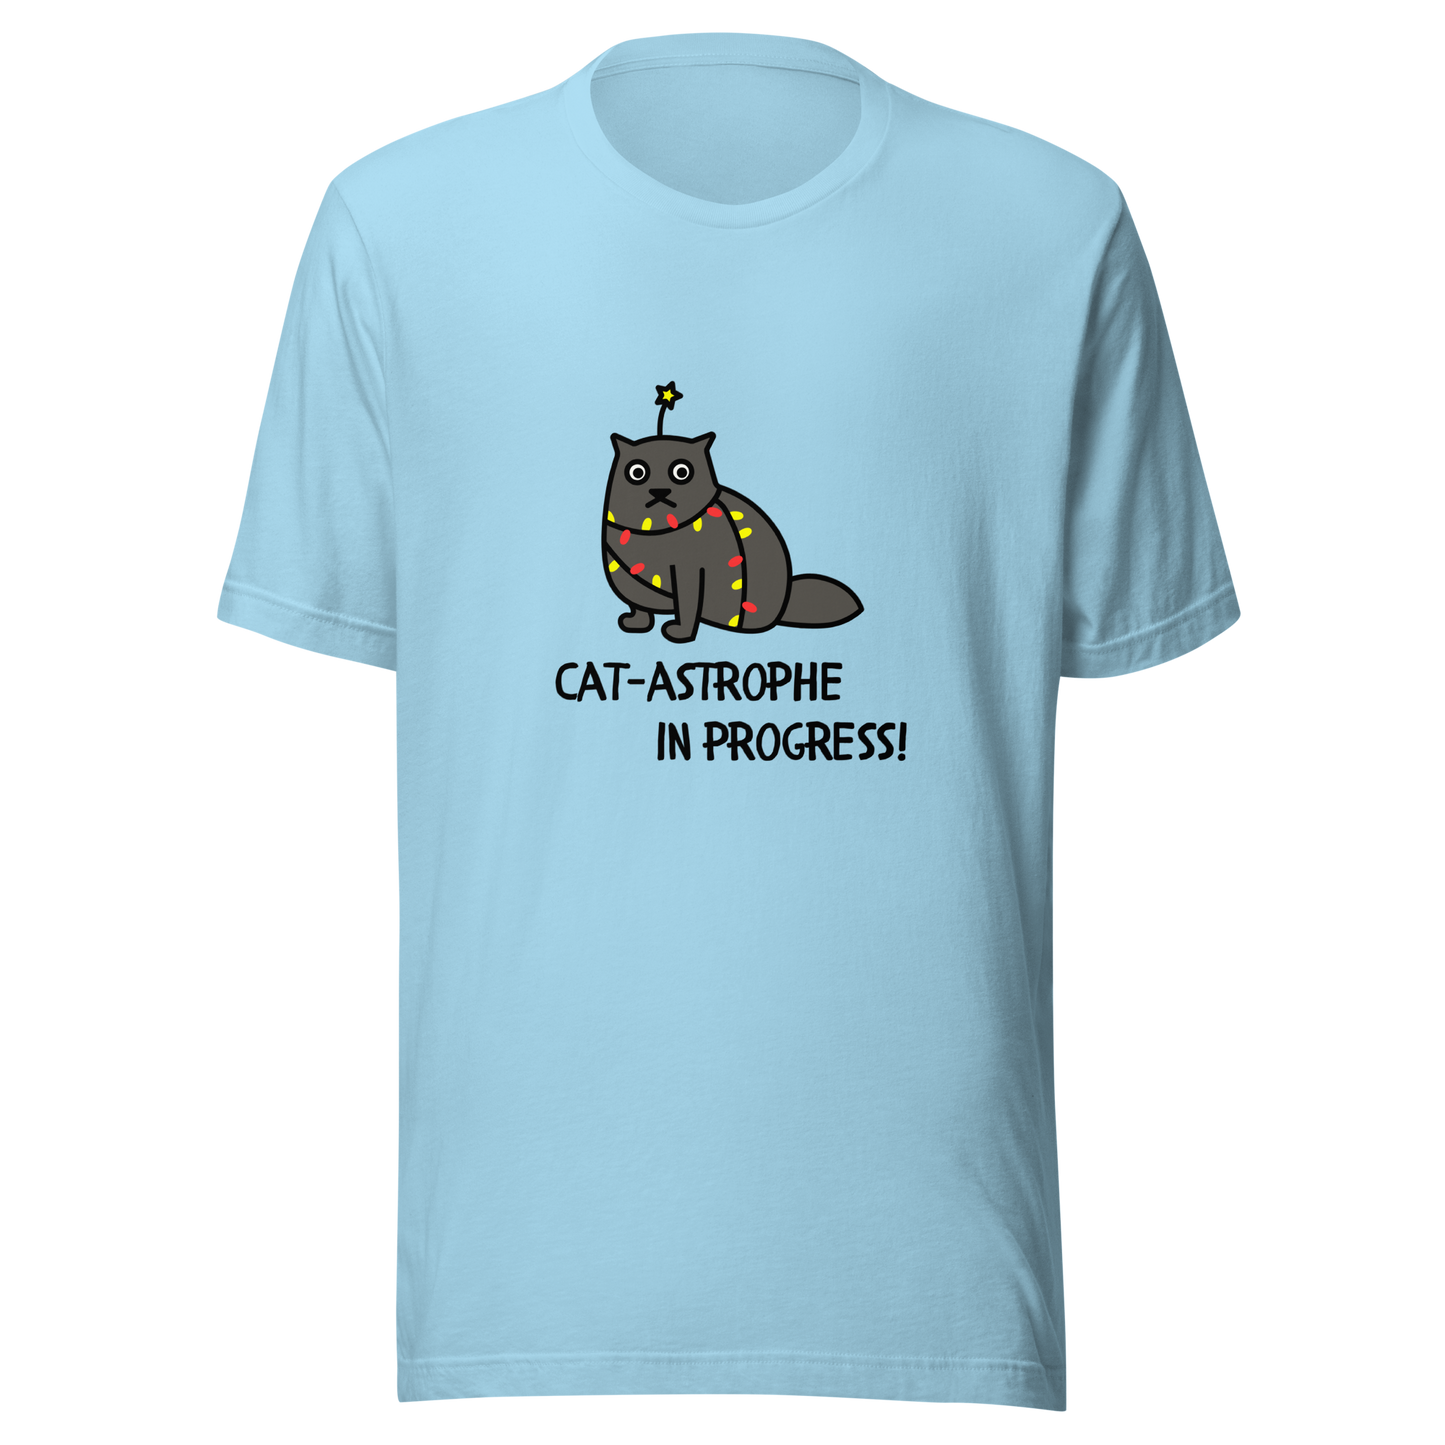 Unisex T-Shirt 'Cat-astrophe in Progress!' - Show off Your Love for Feline Mischief in Style!